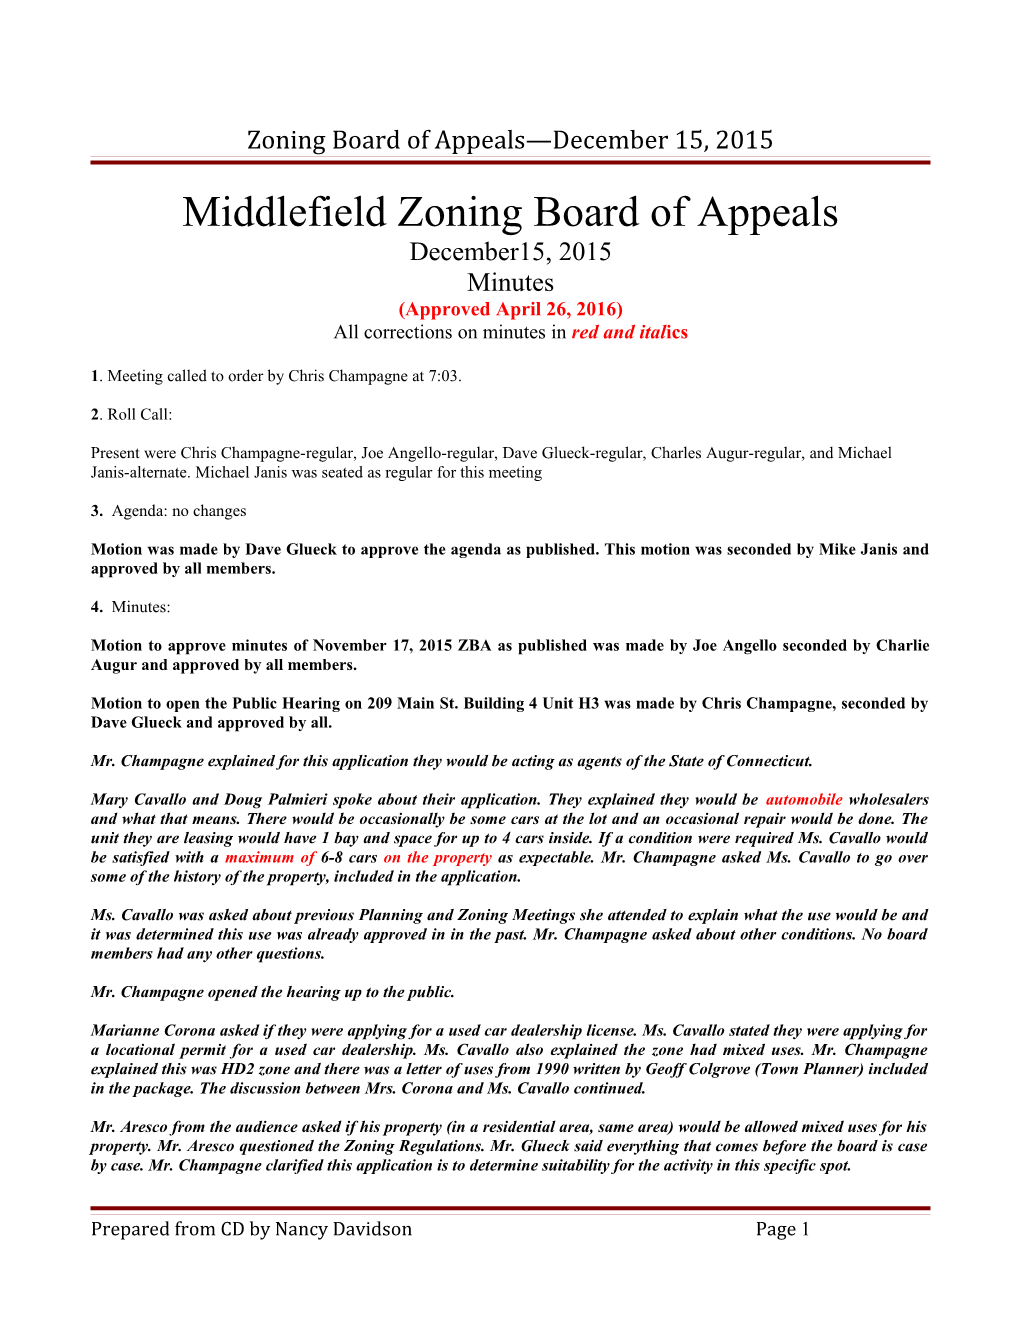 Middlefield Zoning Board of Appeal s1